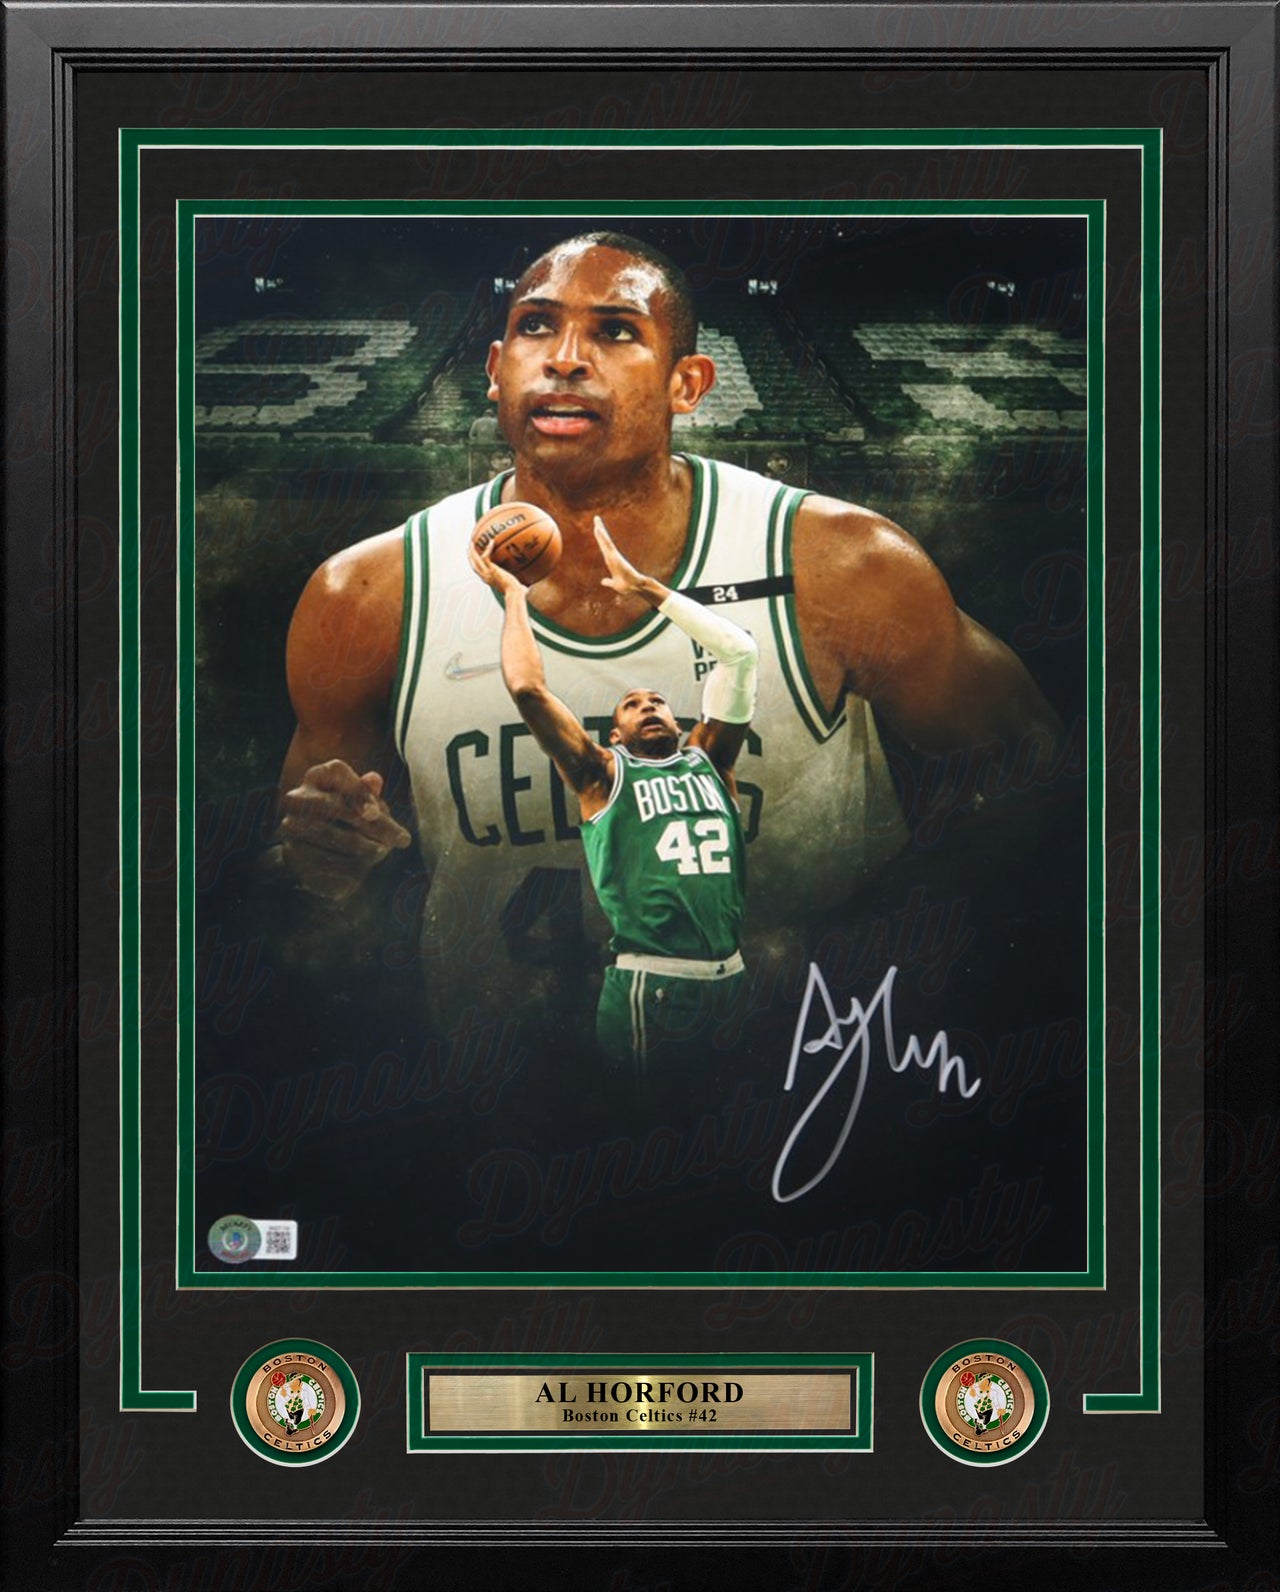 Al Horford Boston Celtics Autographed 11" x 14" Framed Collage Basketball Photo - Dynasty Sports & Framing 